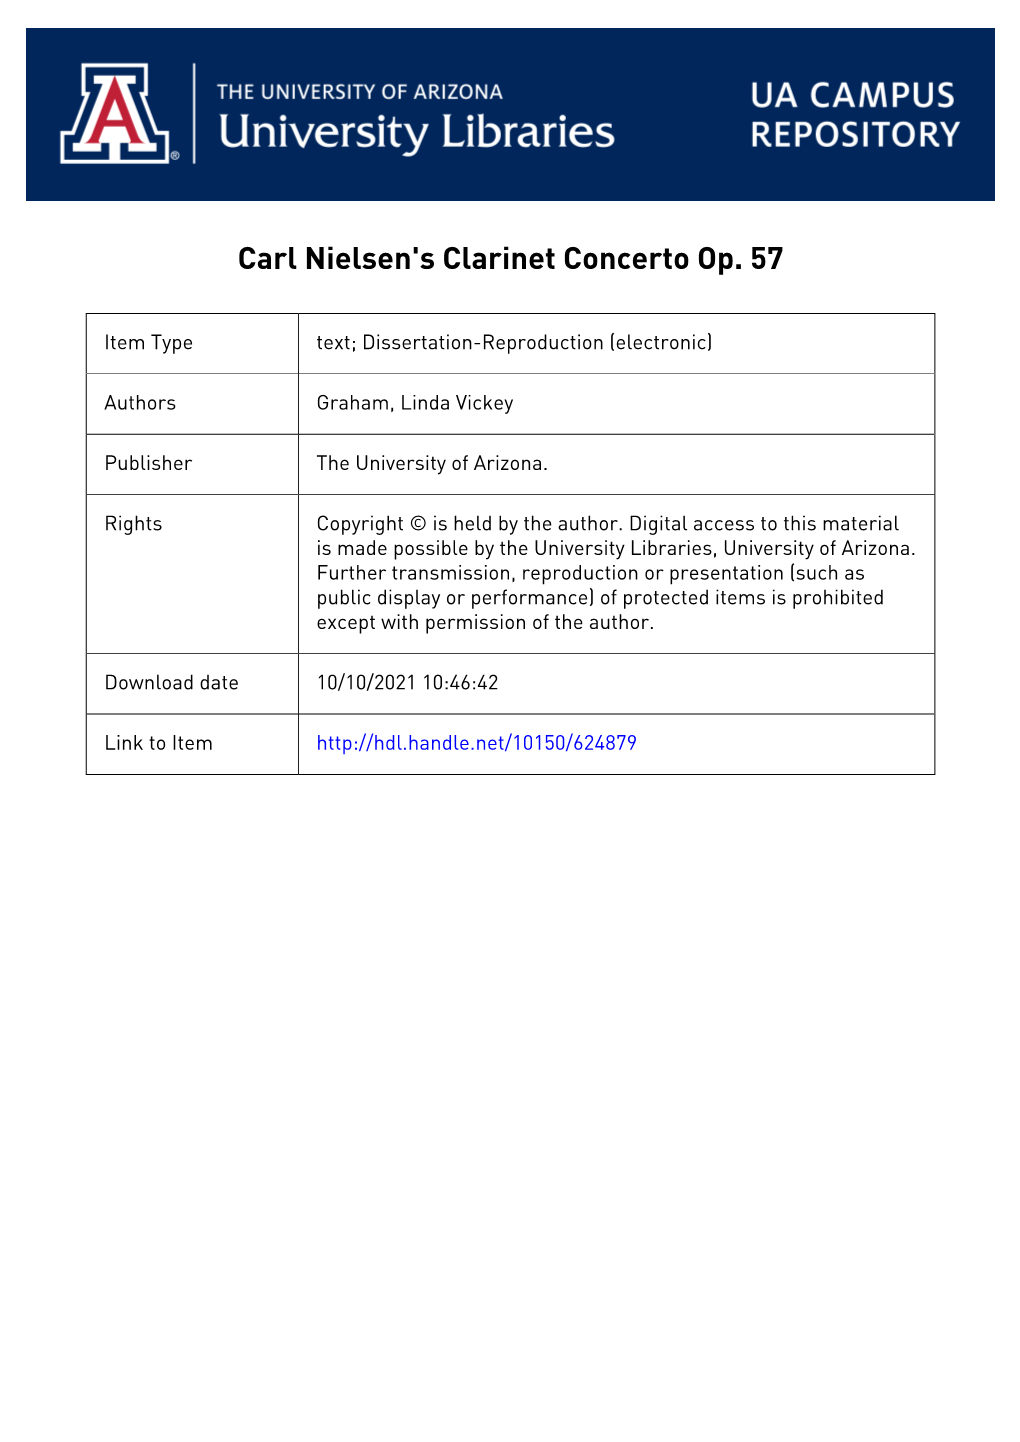 CARL NIELSEN's CLARINET CONCERTO OP. 57 in Partial